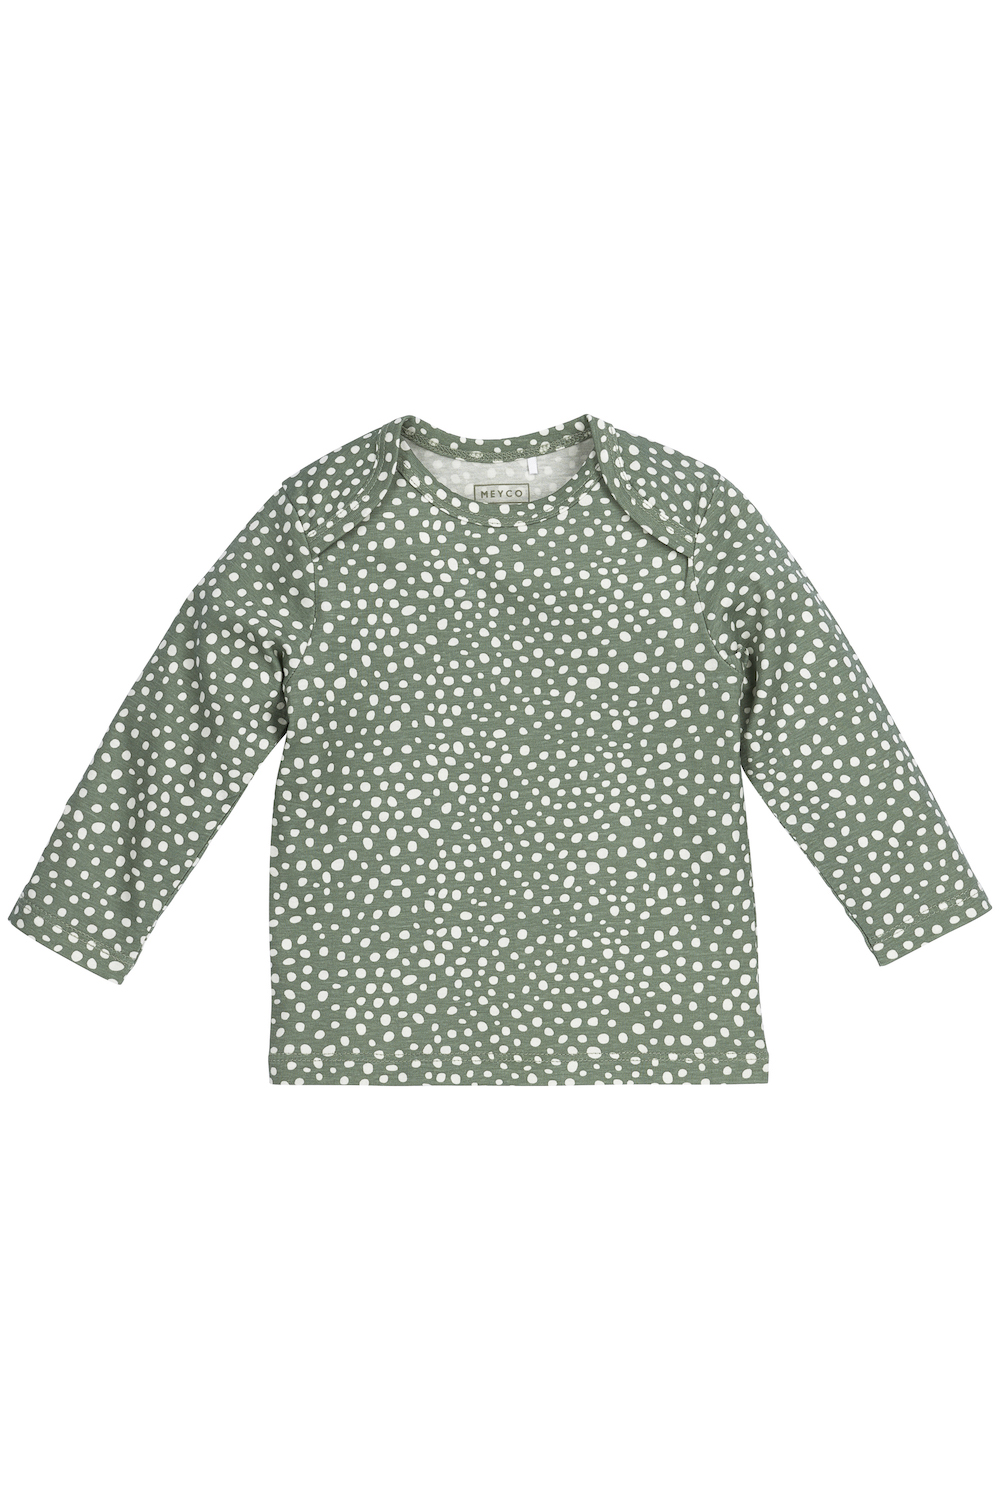 Baby pyjama 2-pack Cheetah - Forest Green - Maat 74/80